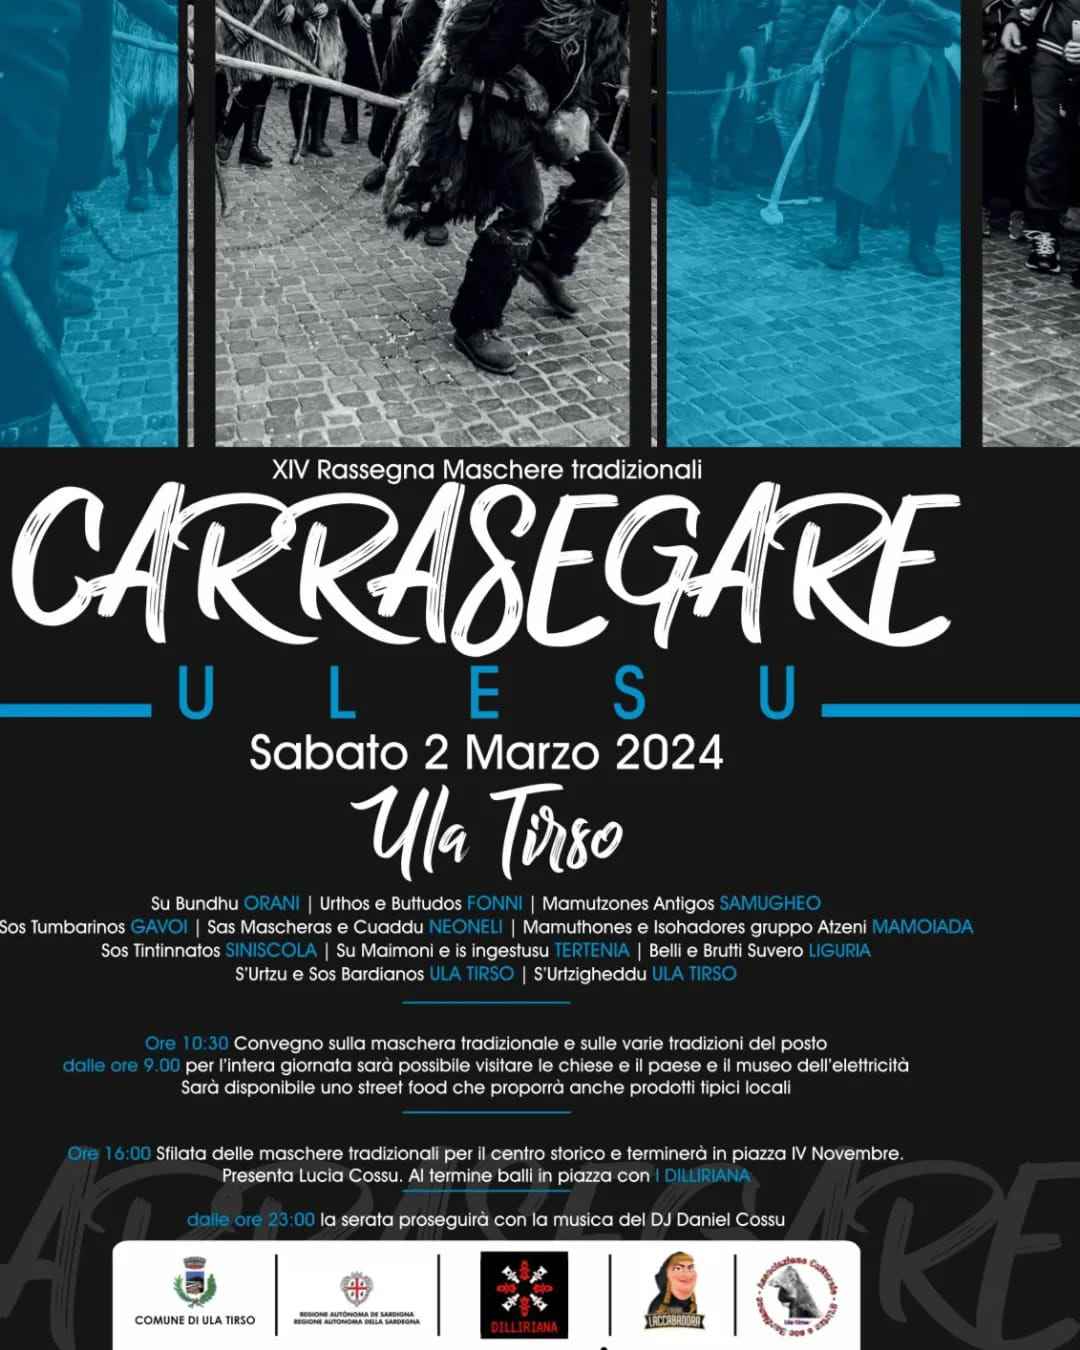 Ula Tirso
"XIII^ CARRASEGARE ULESU" 
4 Marzo 2023